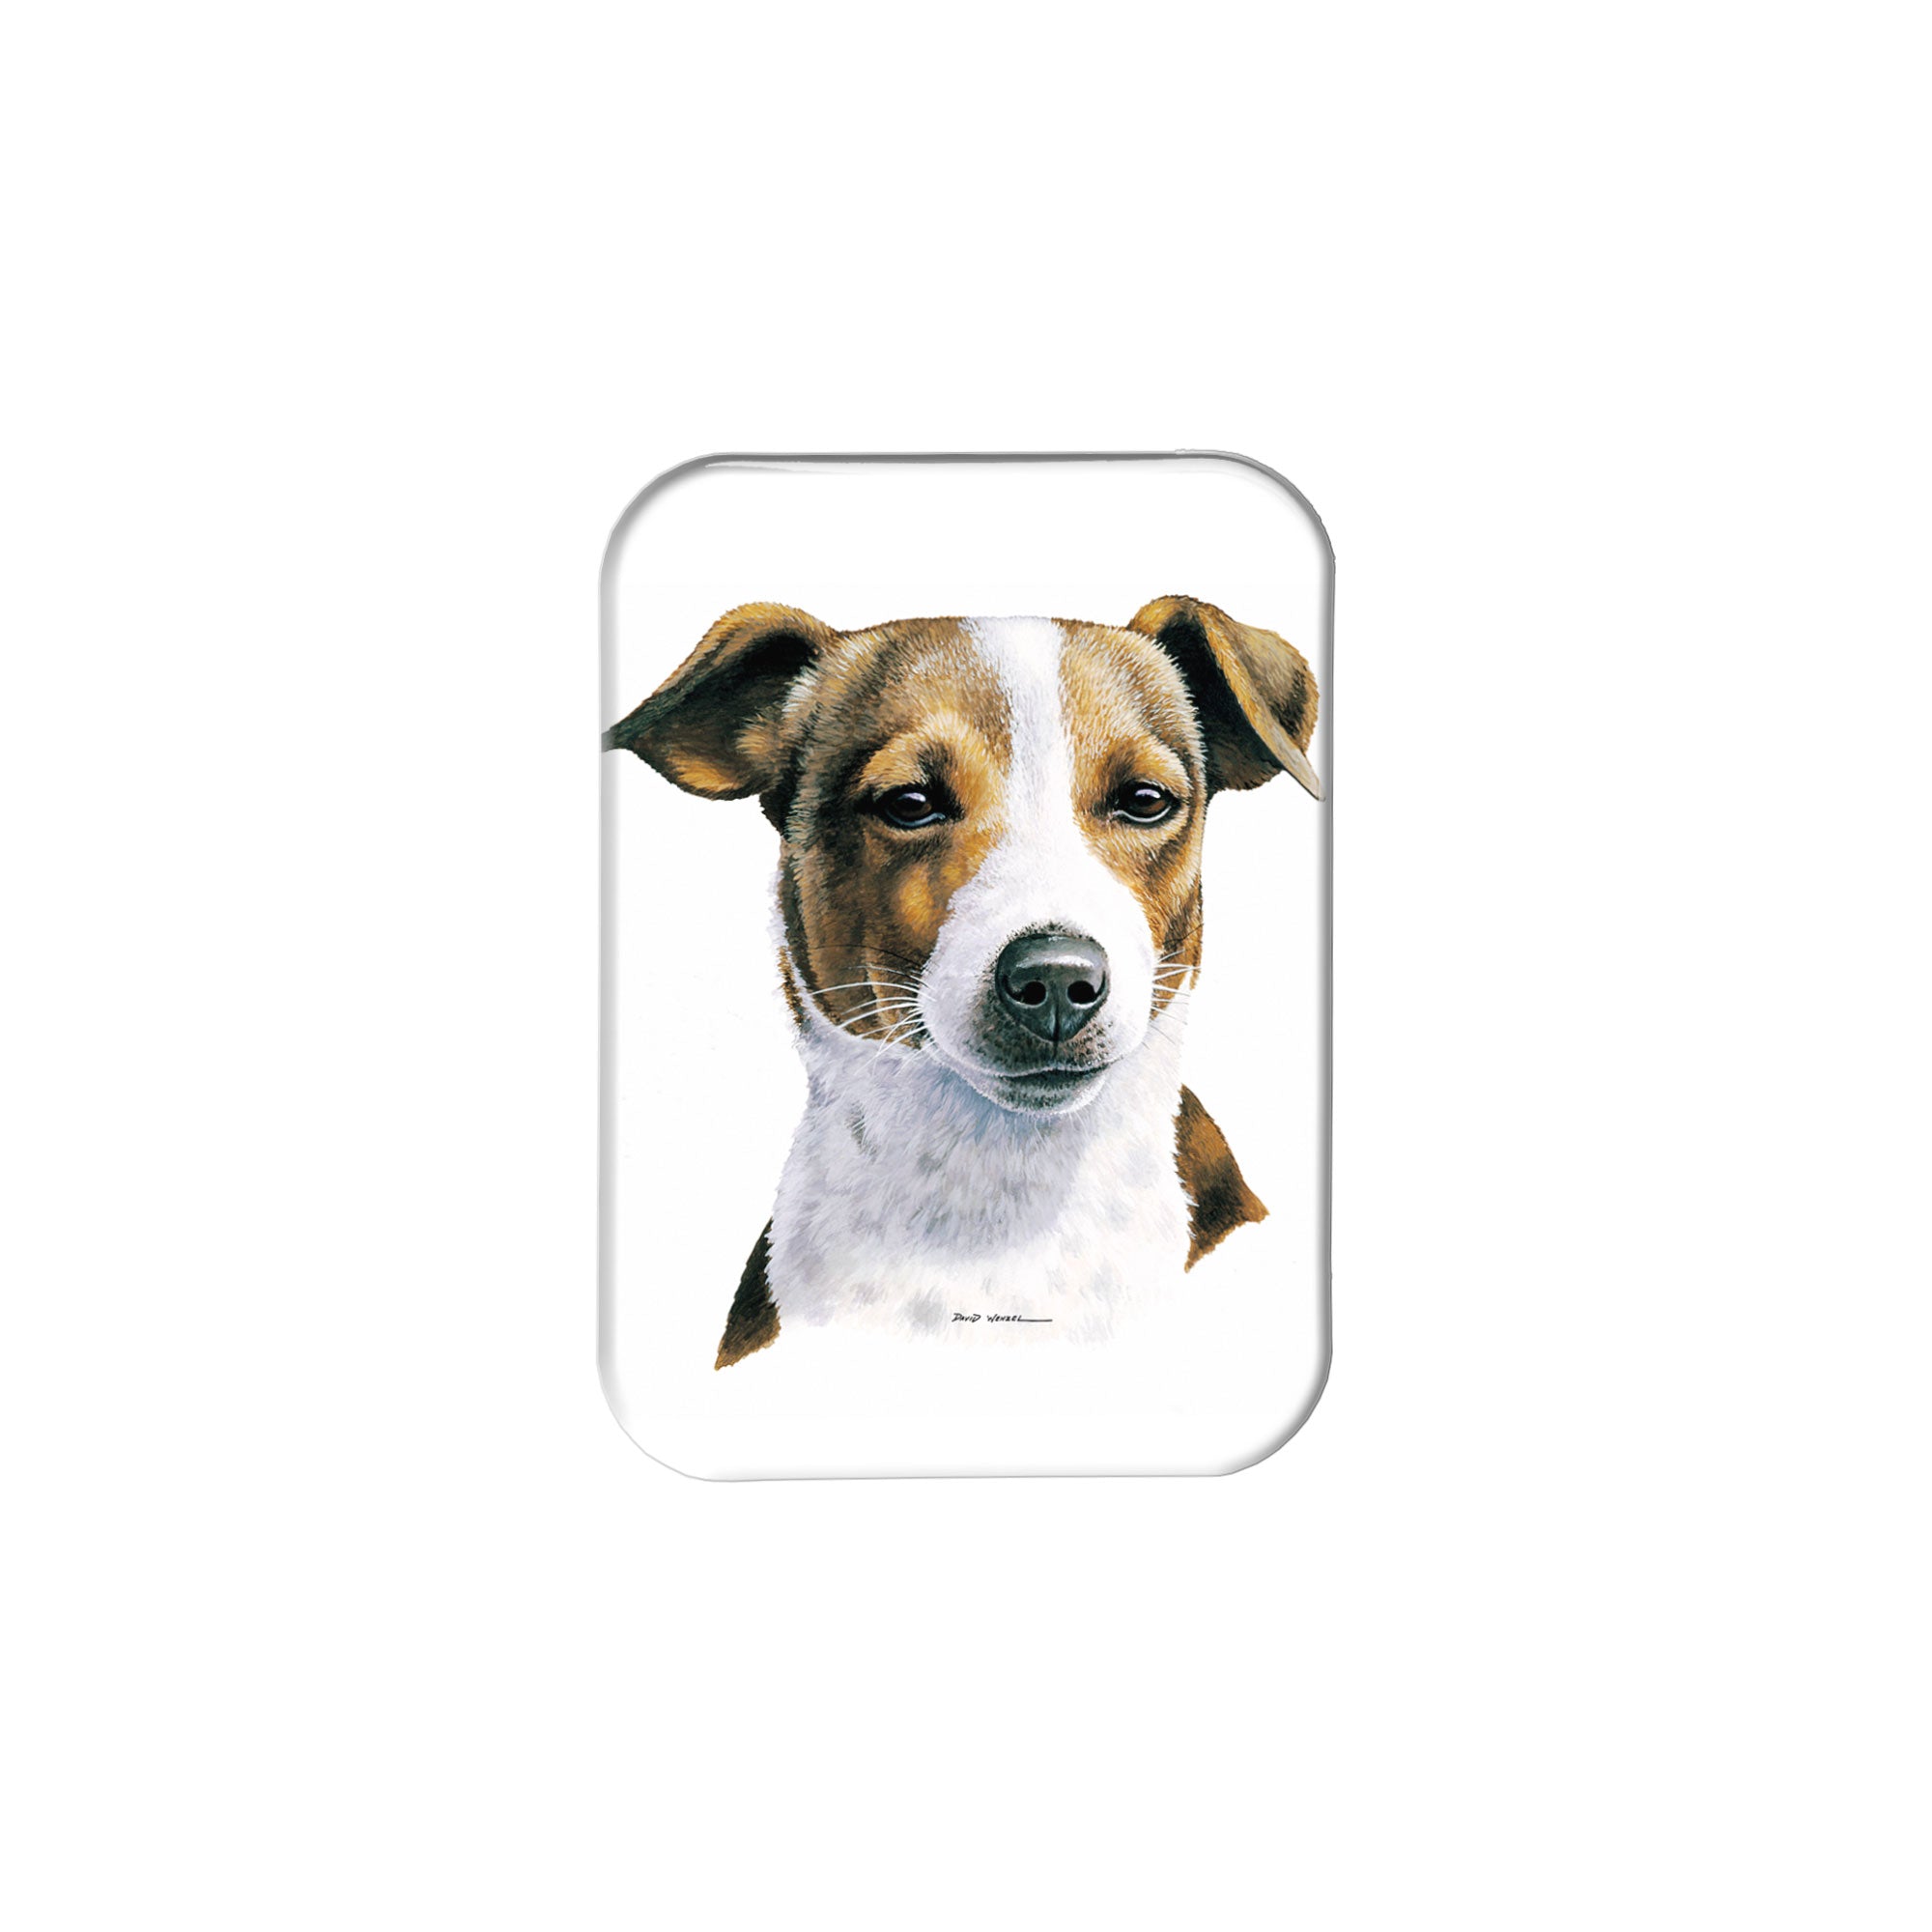 "Jack Russell Terrier" - 2.5" X 3.5" Rectangle Fridge Magnets